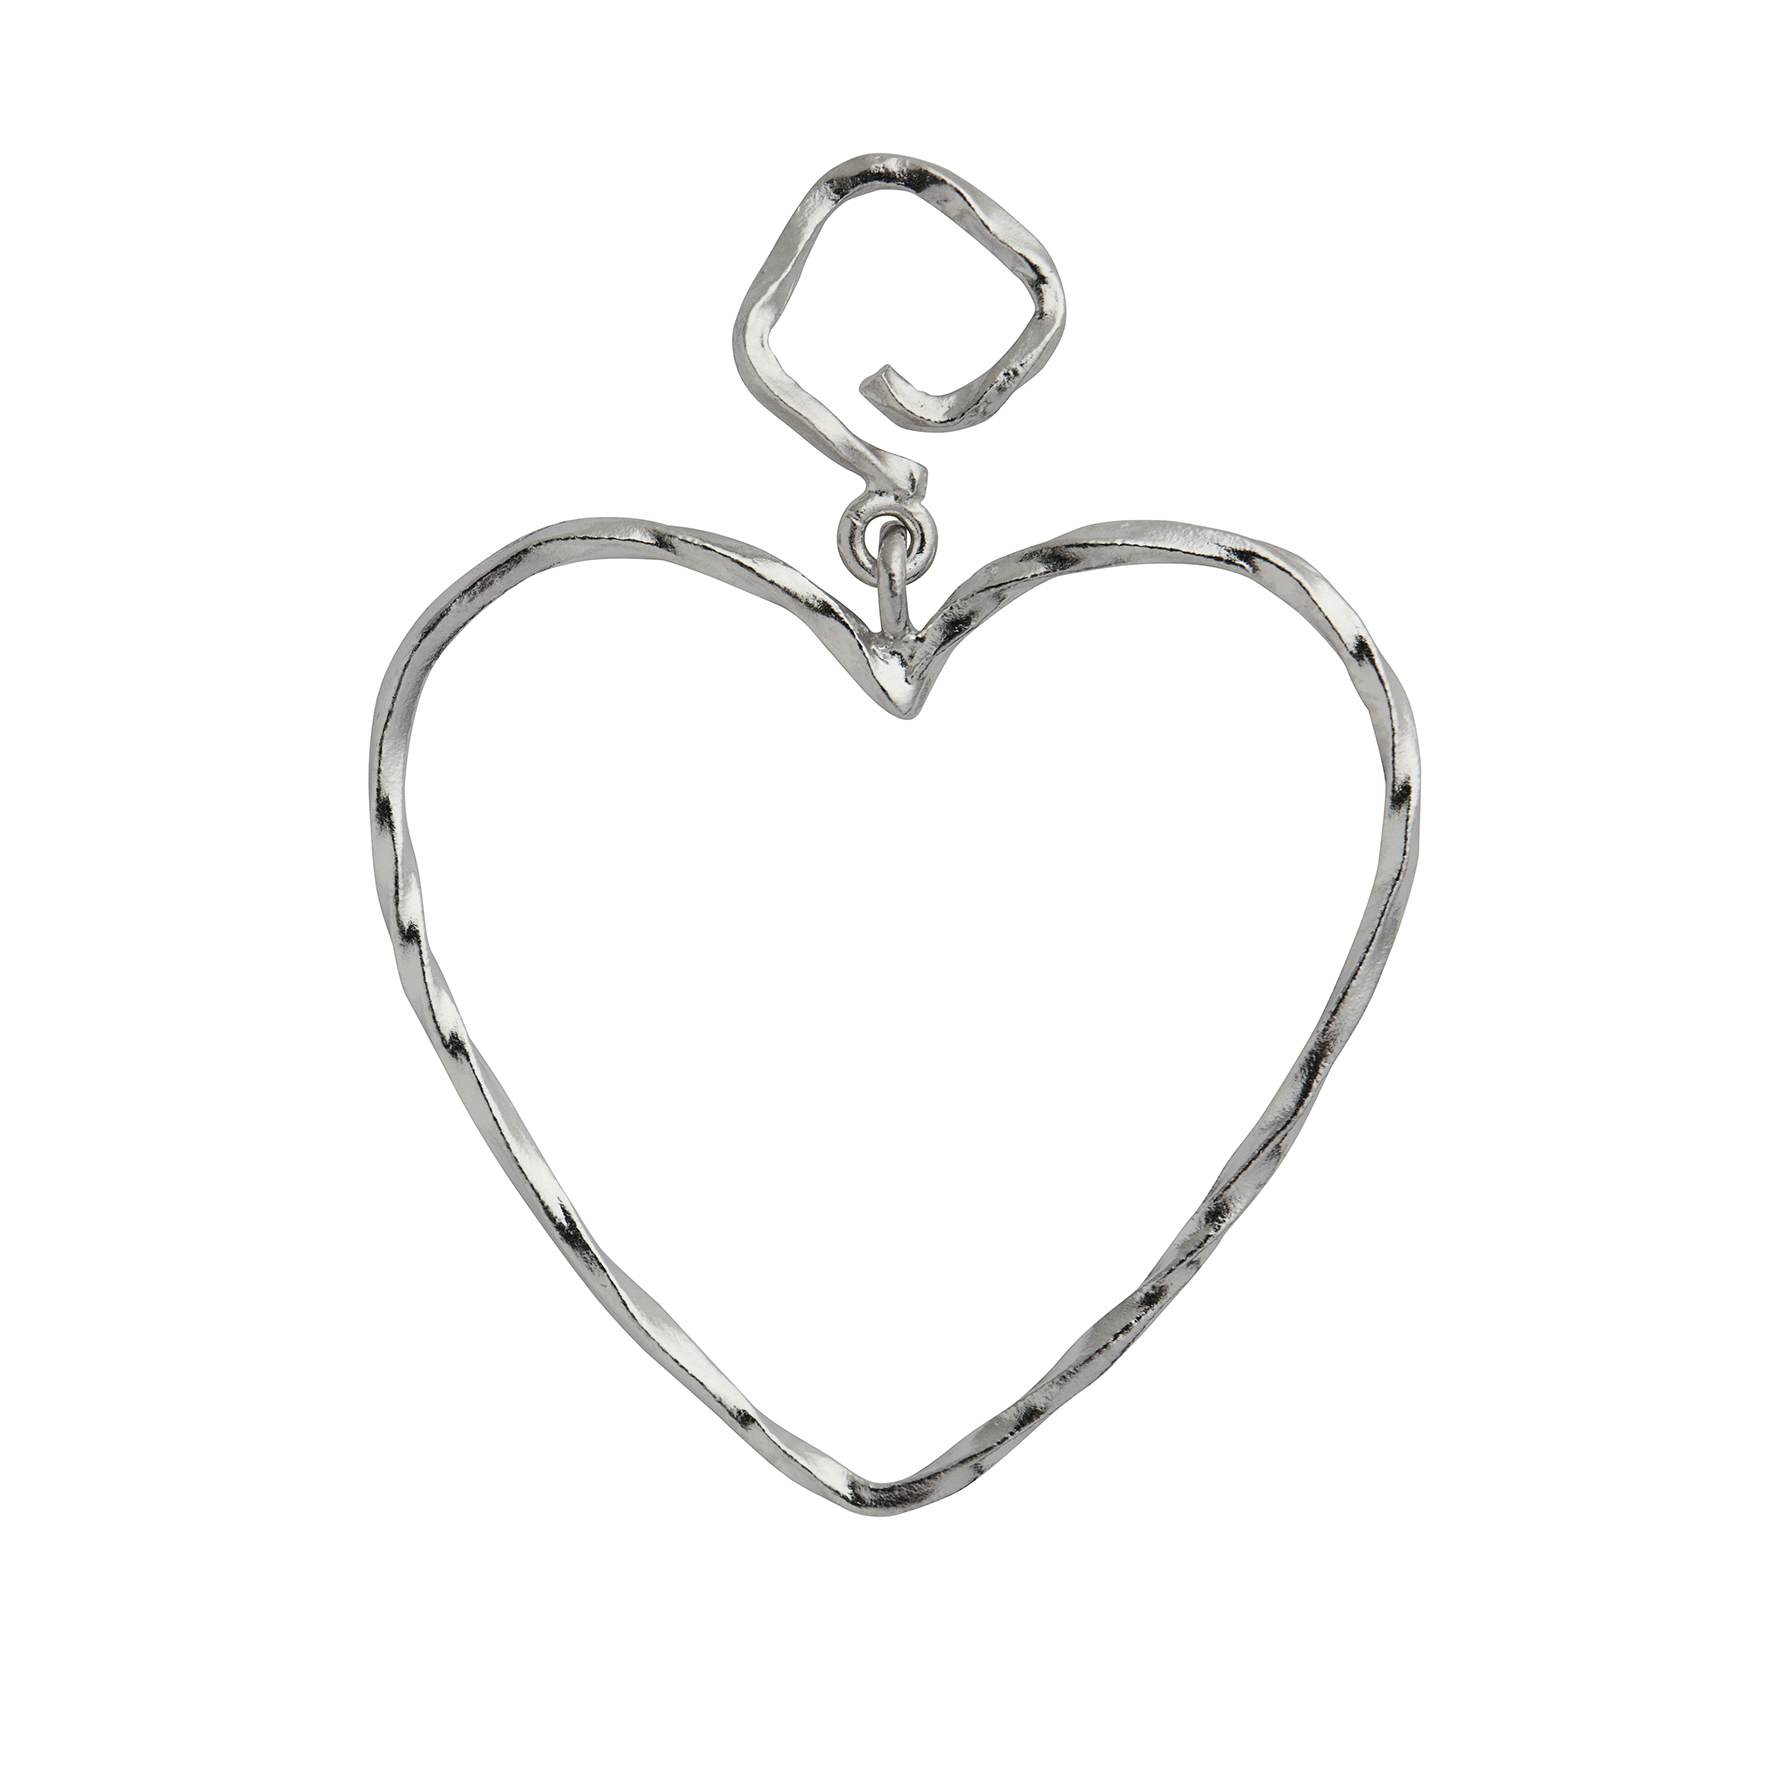 Funky Heart Earring von STINE A Jewelry in Silber Sterling 925